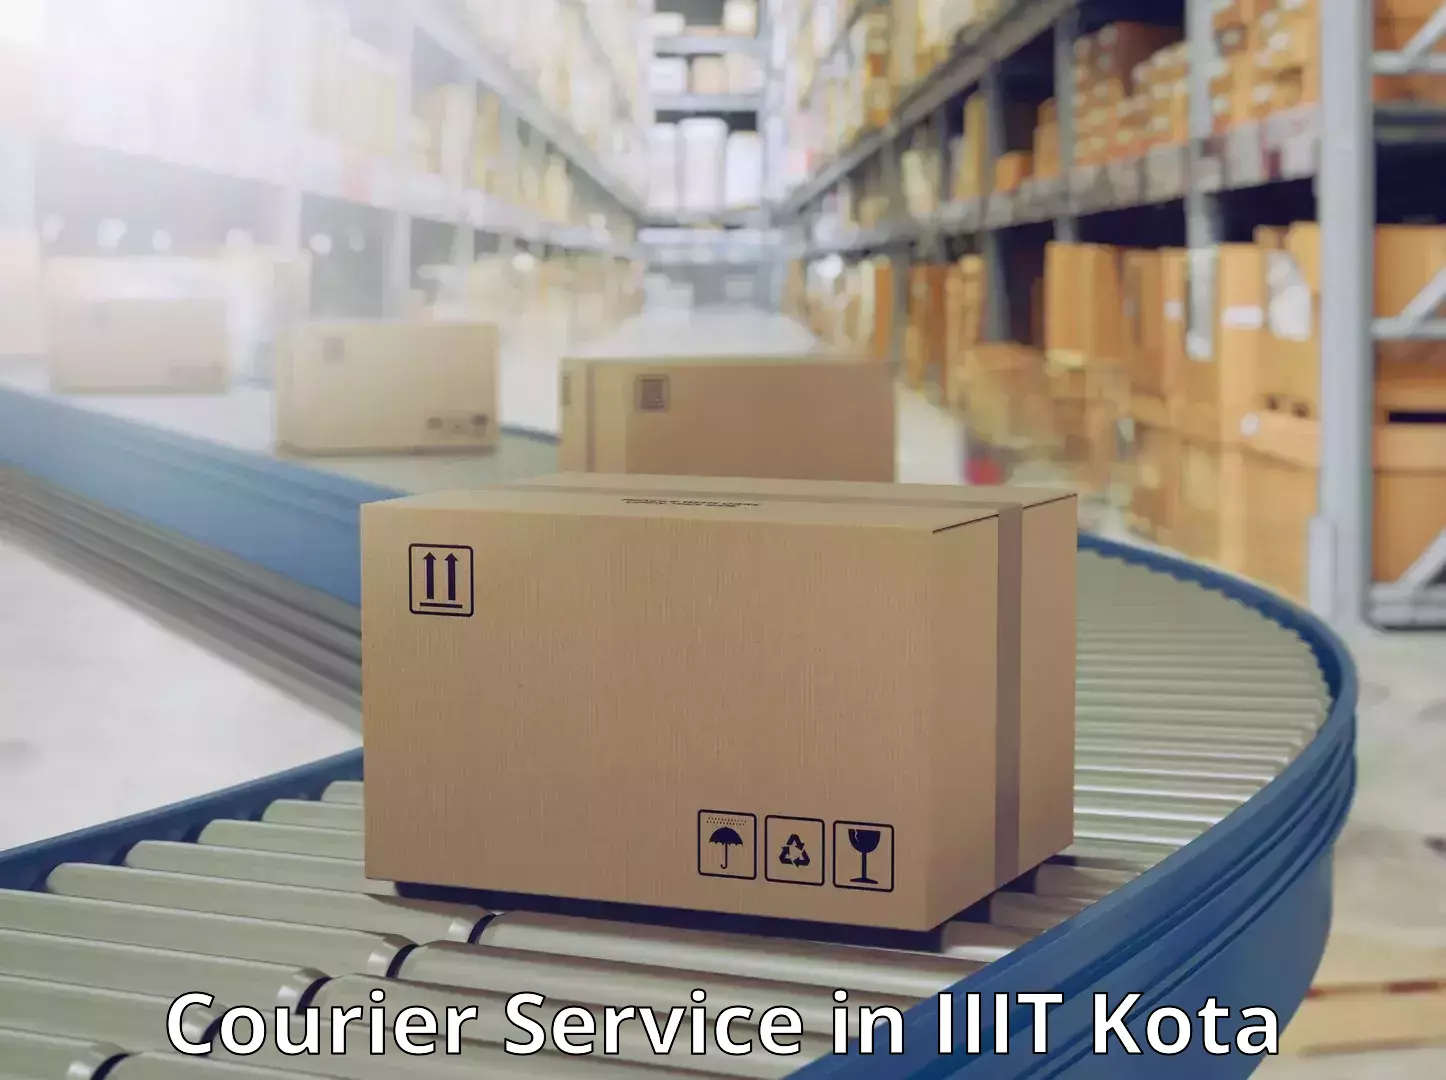 Courier service comparison in IIIT Kota